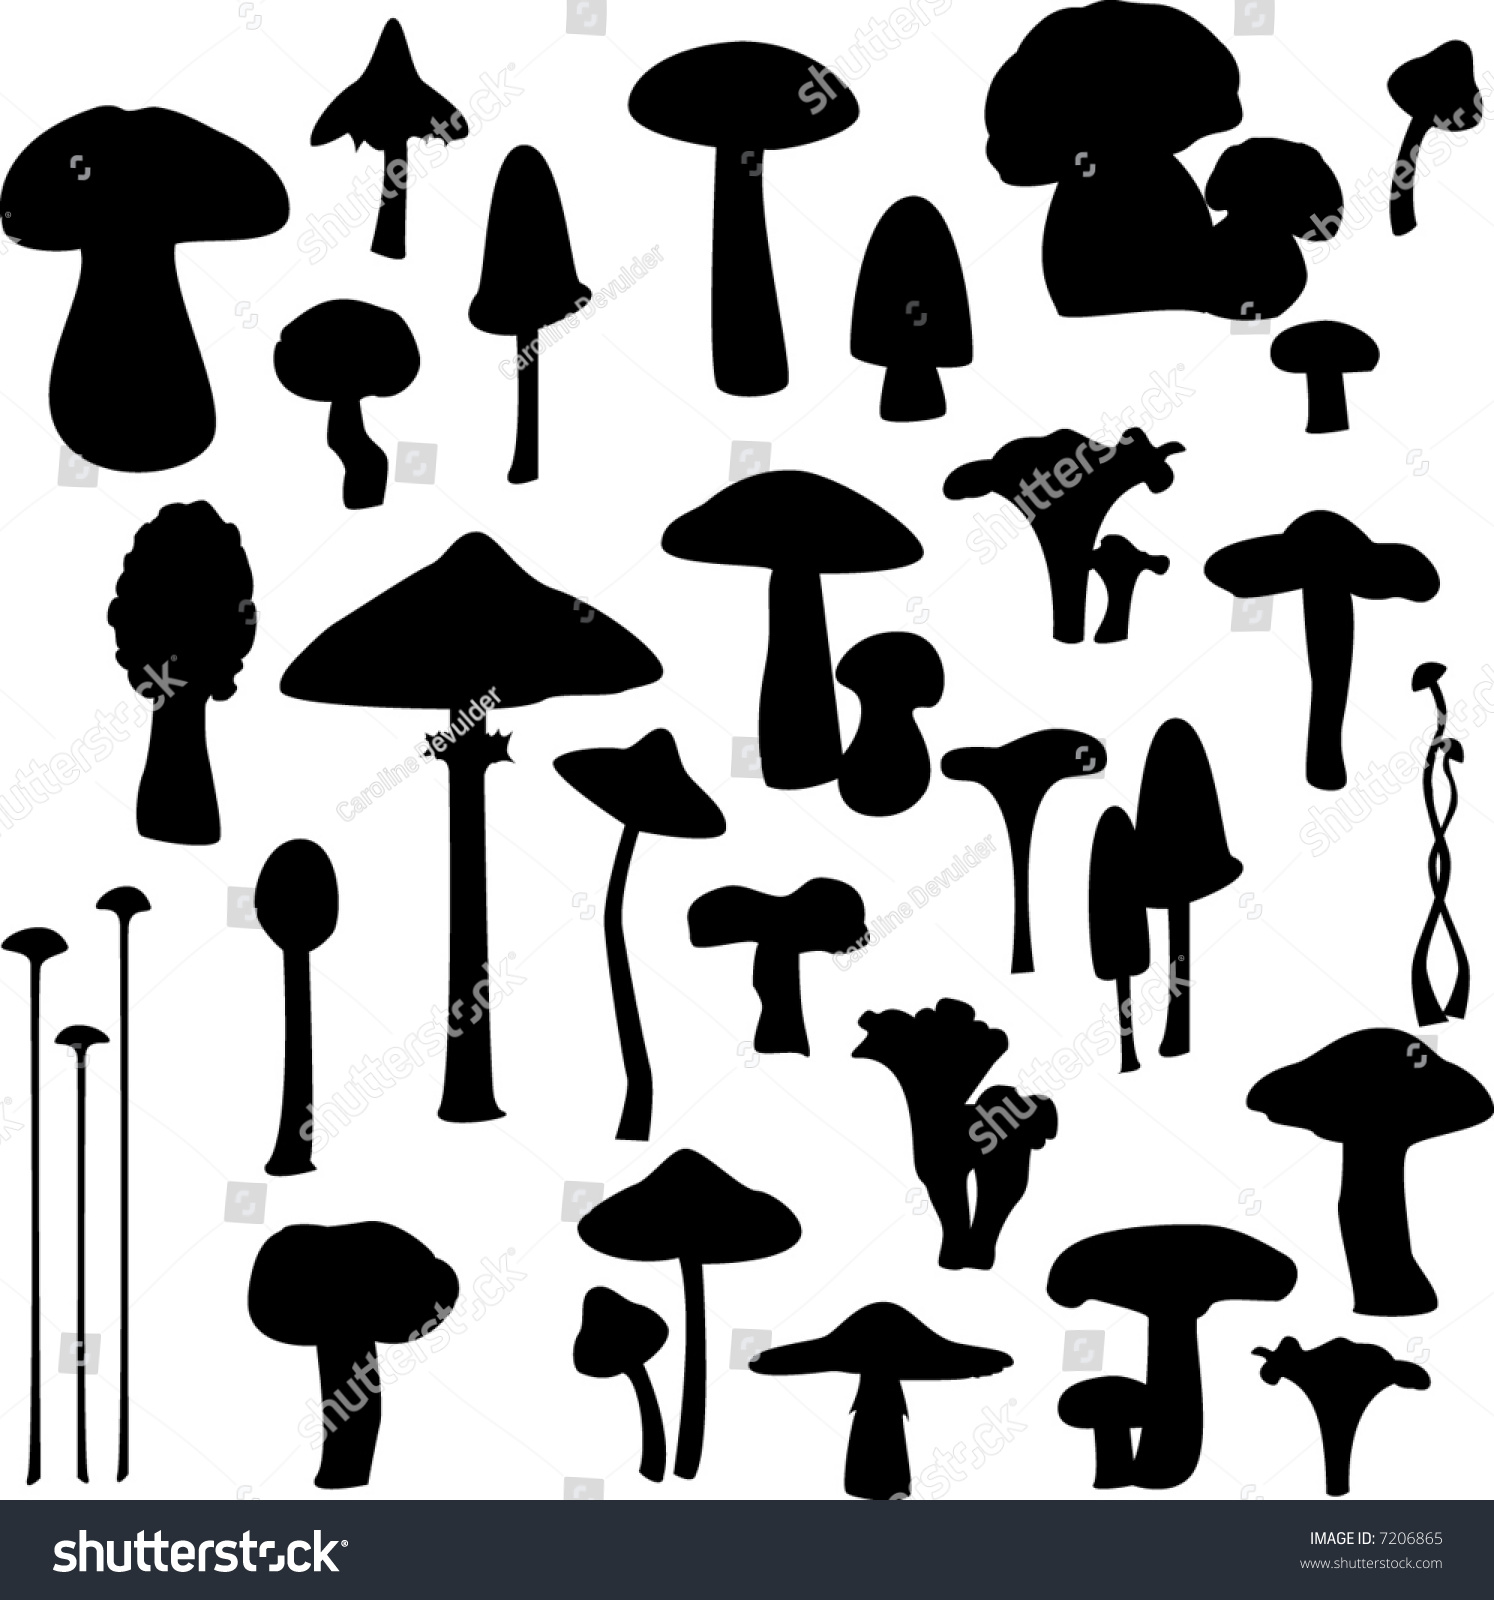 mushroom silhouette clip art - photo #23